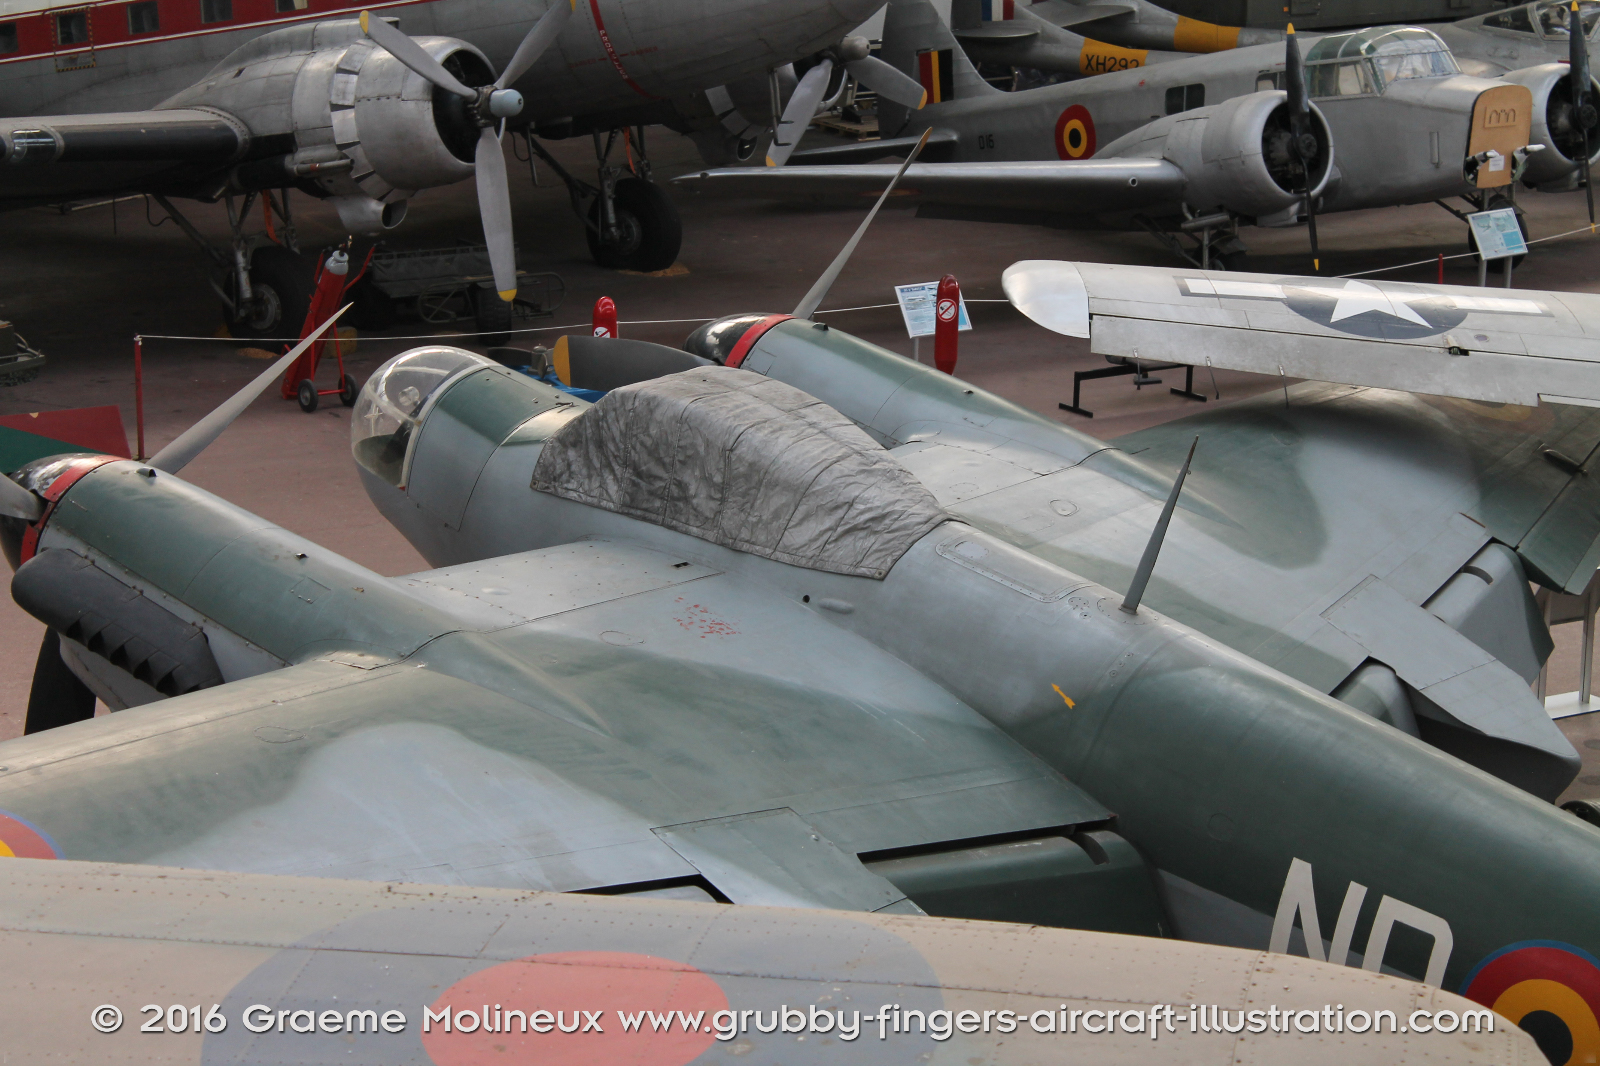 de_Havilland_Mosquito_Walkaround_Mk30_MB-42_Belgian_Air_Force_Museum_2015_02_GraemeMolineux